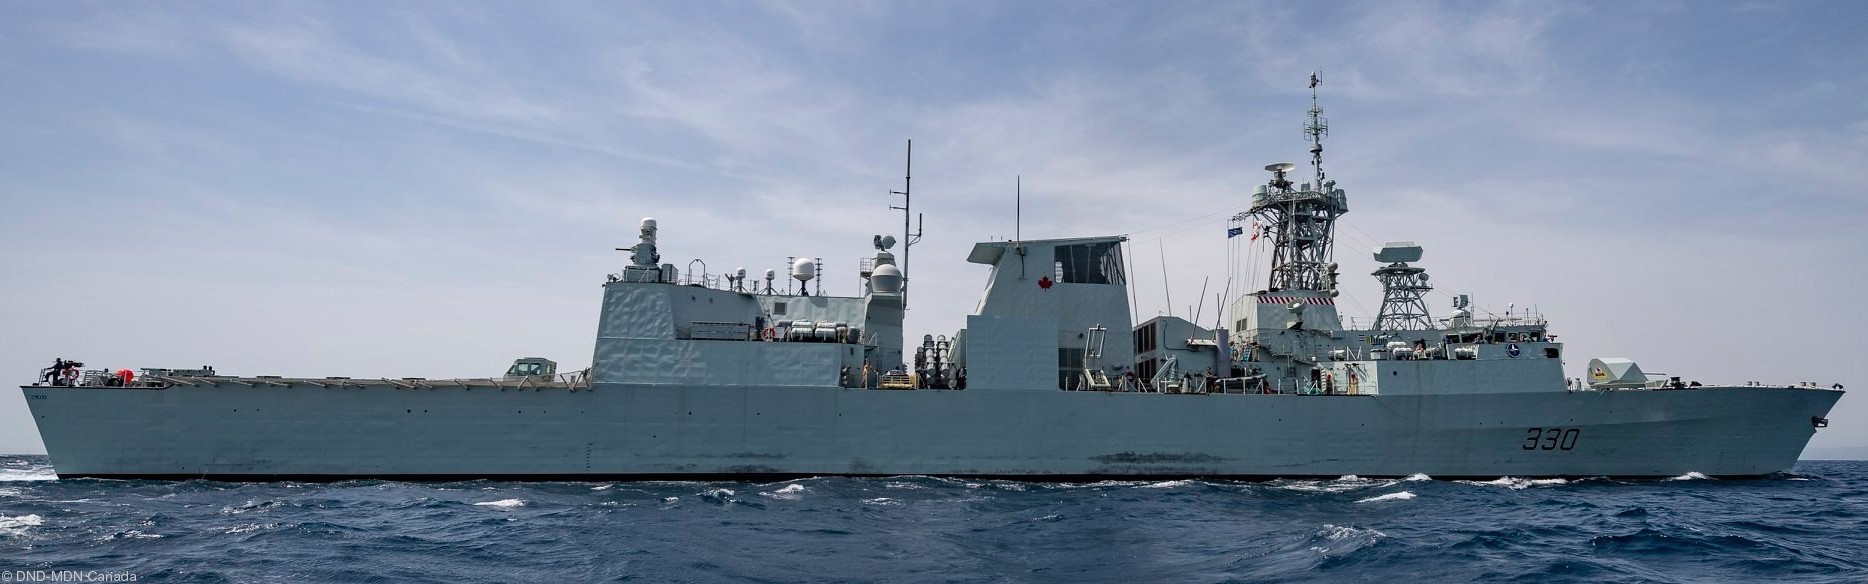 ffh-330 hmcs halifax class helicopter patrol frigate royal canadian navy rcn ncsm marine royale canadienne 33